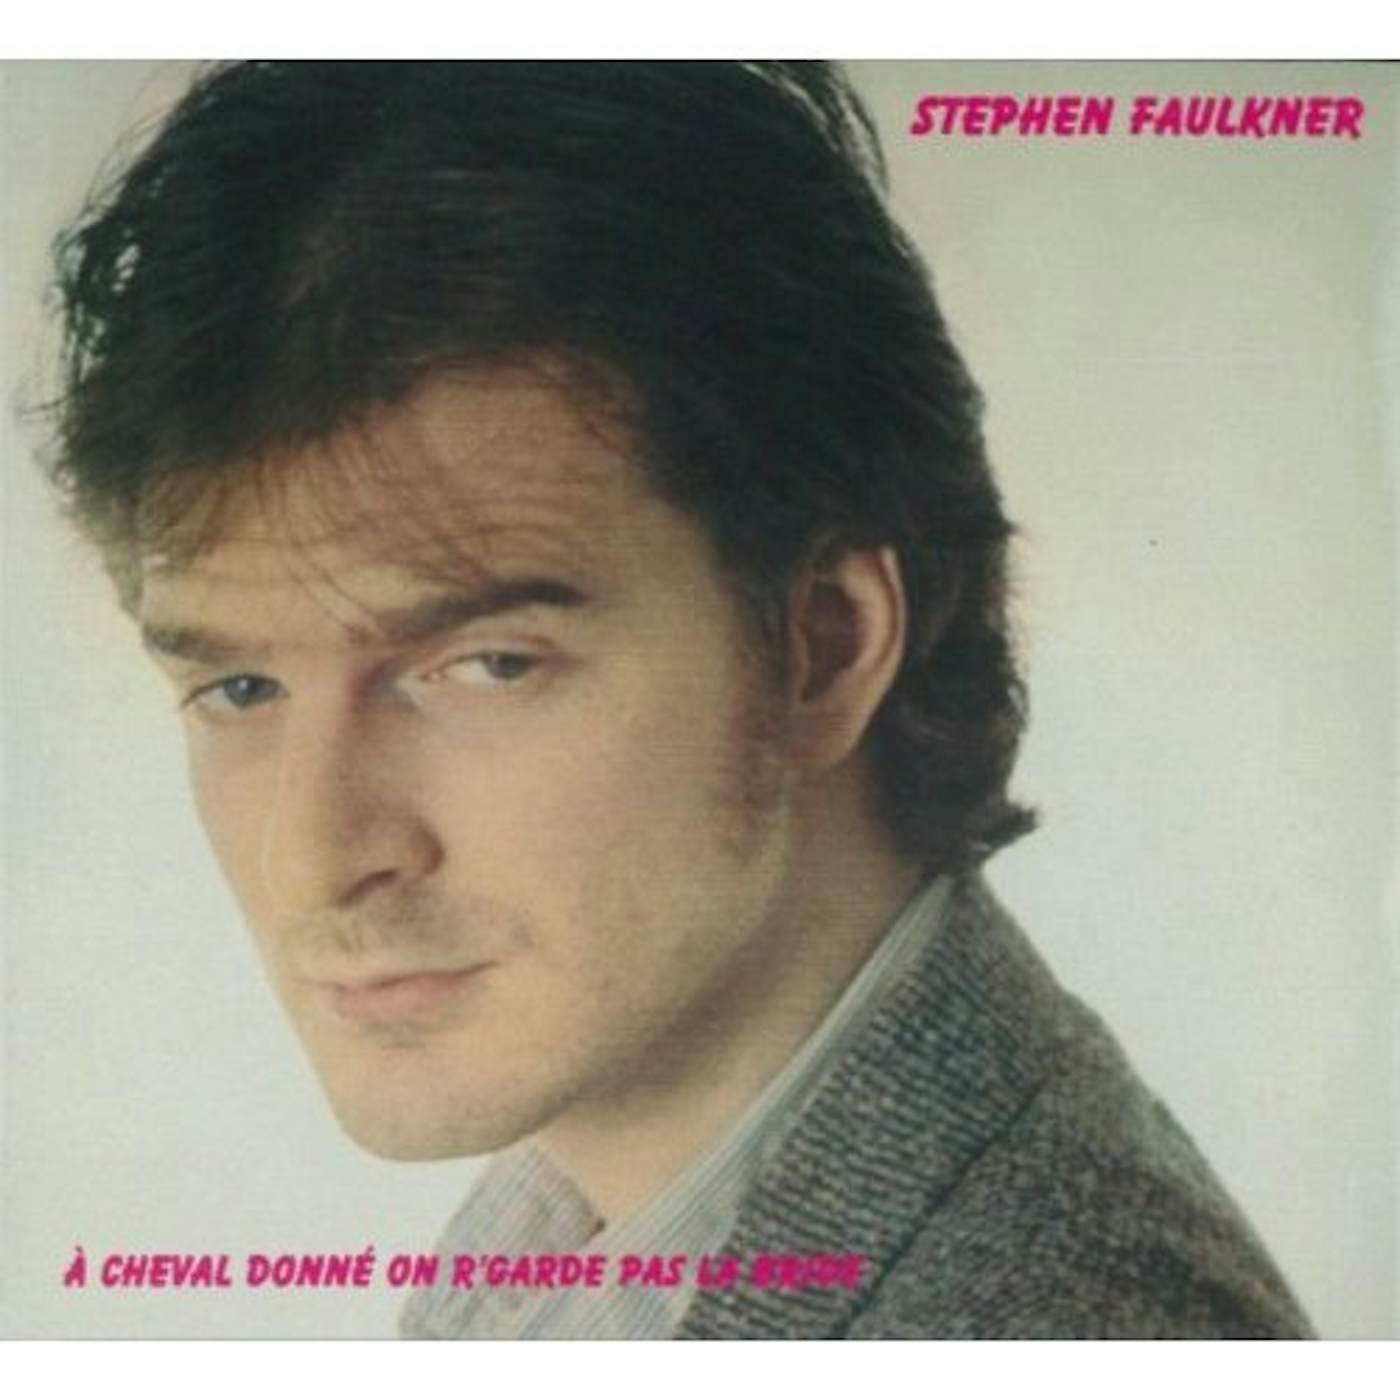 Stephen Faulkner CHEVAL DONNE ON R'GARDE PAS LA BRIDE CD